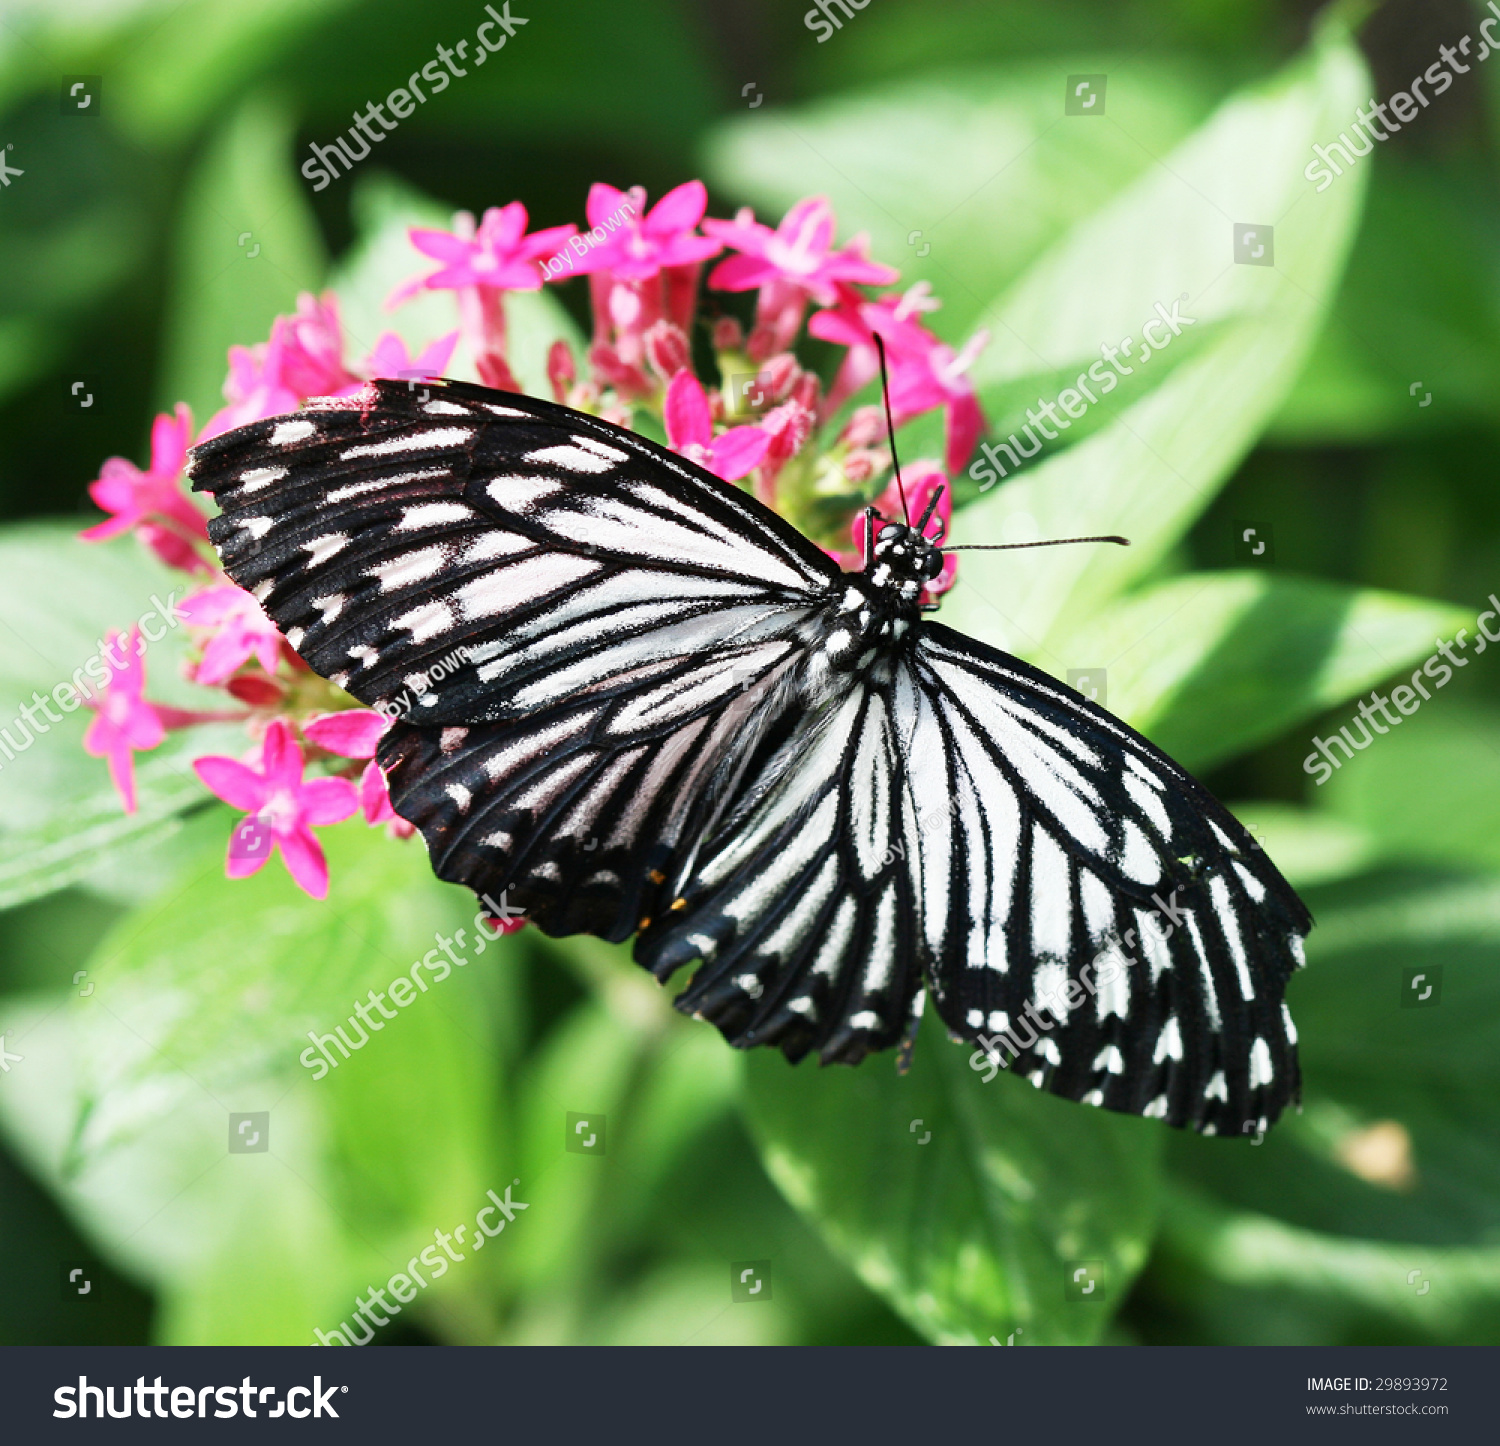 Beautiful Rice Paper Butterfly Stock Photo 29893972 - Shutterstock